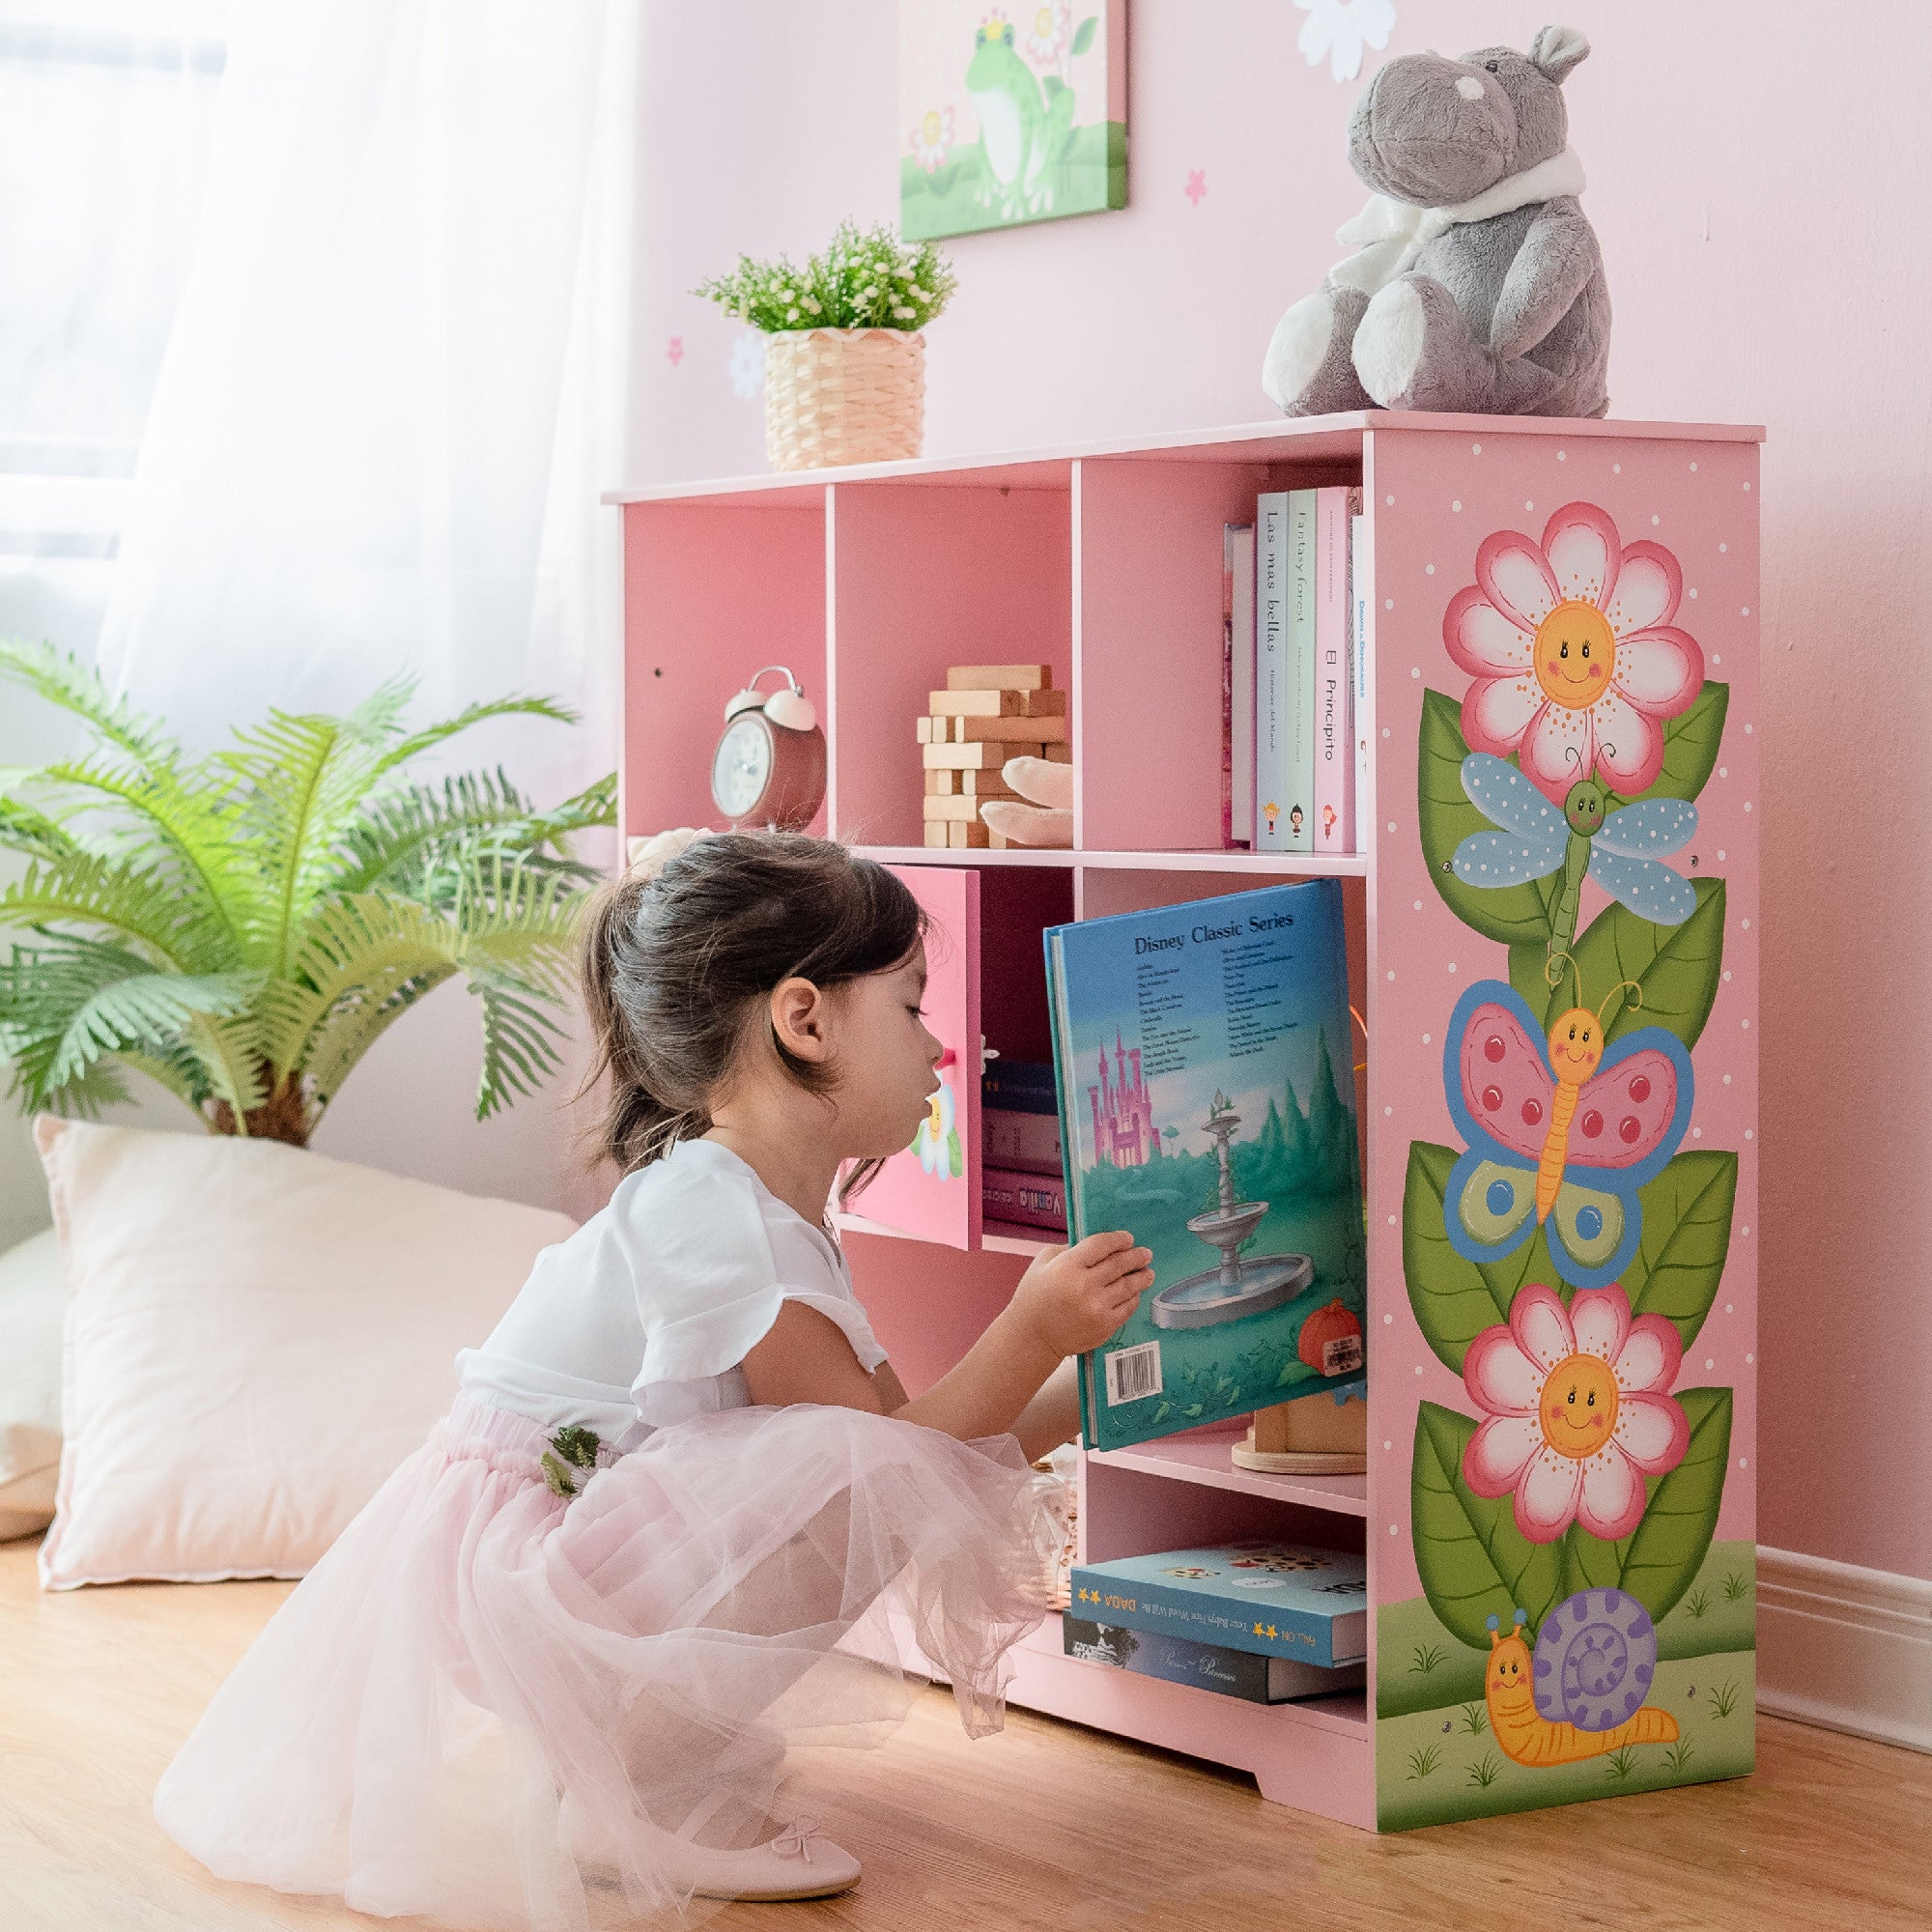 |Magic Fantasy Kids Book Fields Children Shelves Book Shelves Garden | – Teamson Kids Bookshelf |